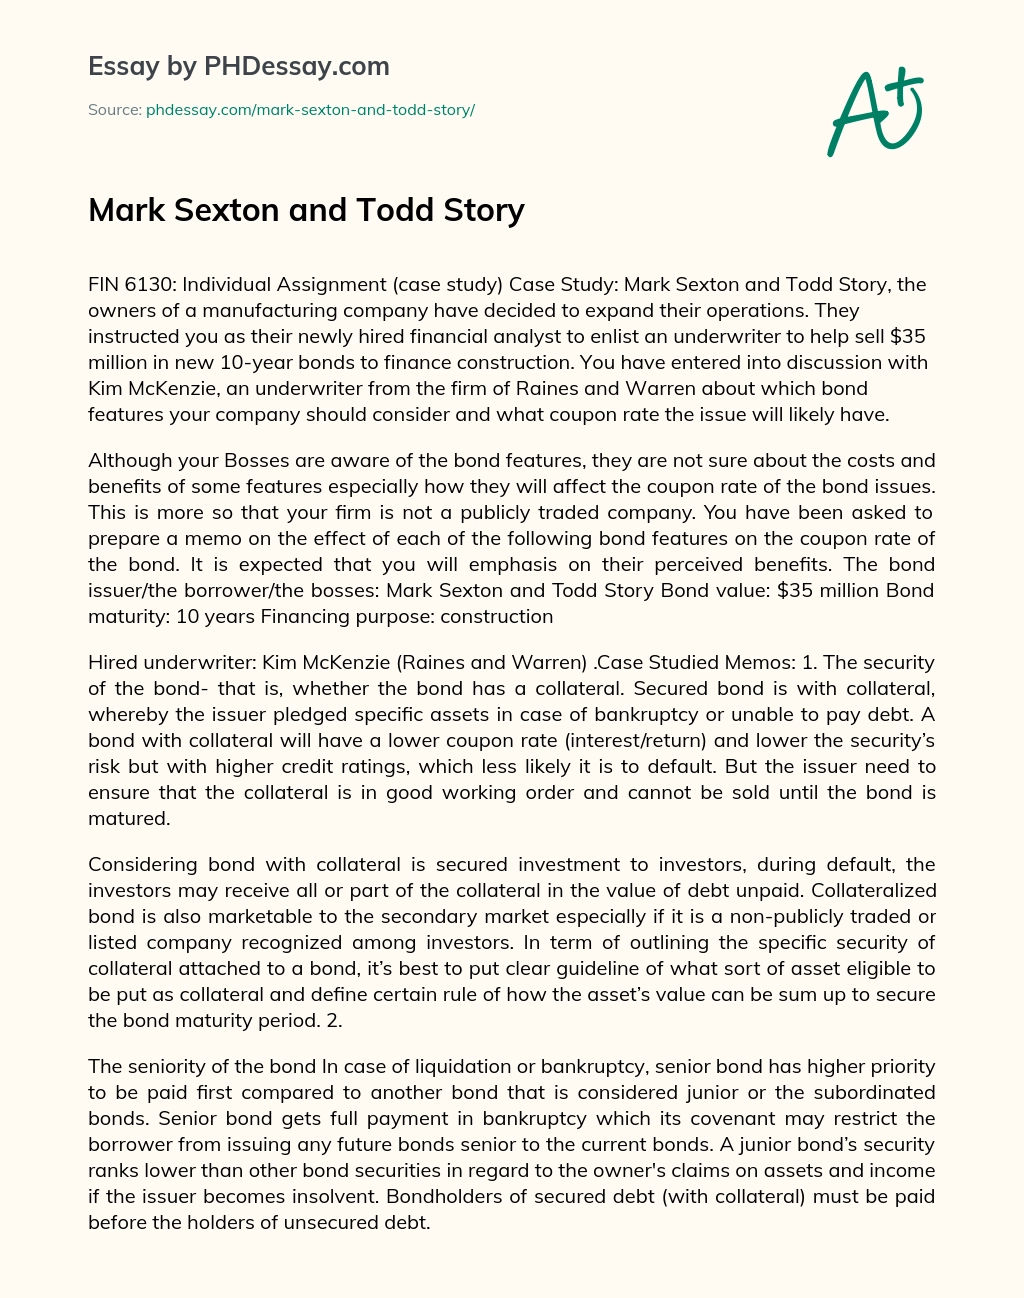 Mark Sexton and Todd Story essay